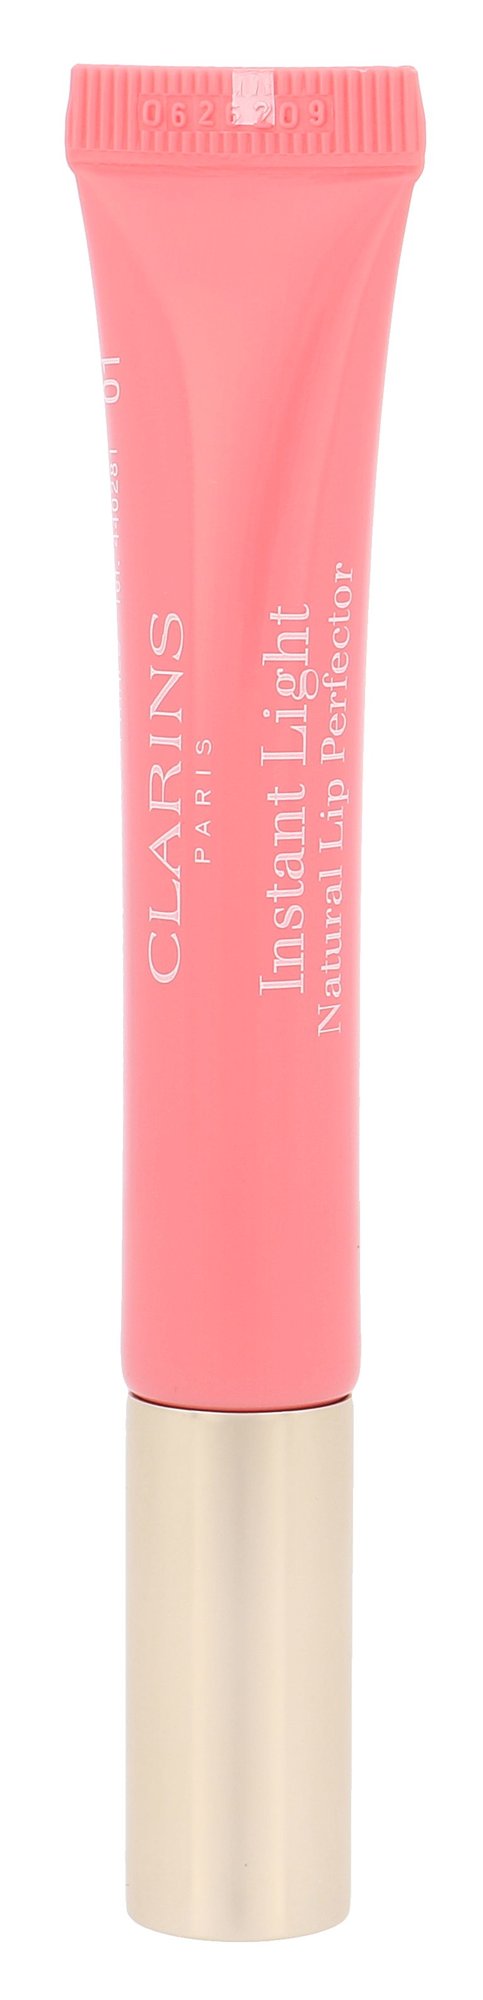 Clarins Instant Light Natural Lip Perfector 12ml lūpų blizgesys